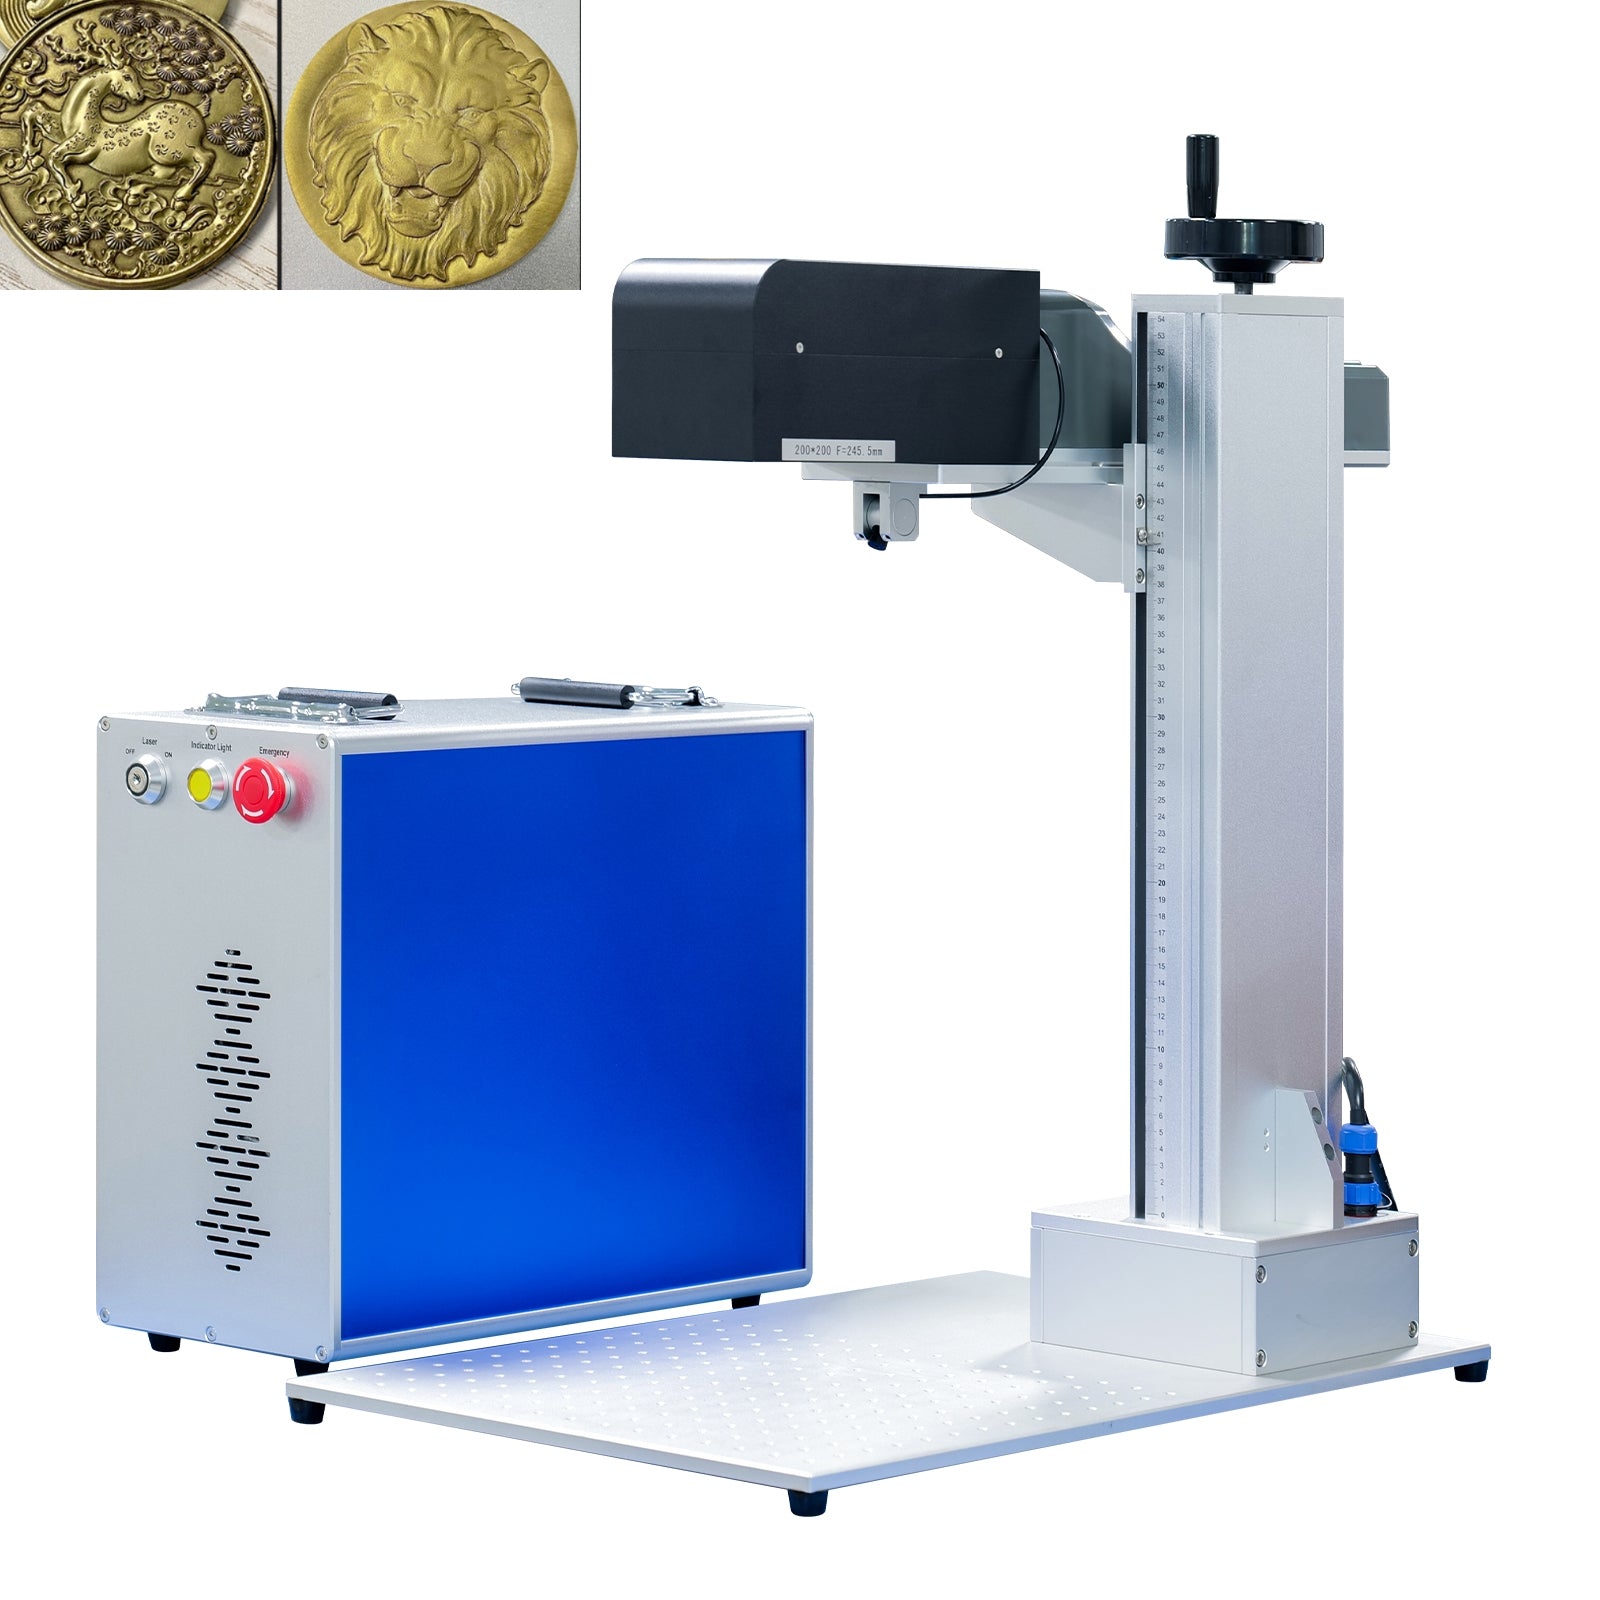 ZAC JPT Fiber Laser Engraver Machine Split 20W/30W/50W Laser